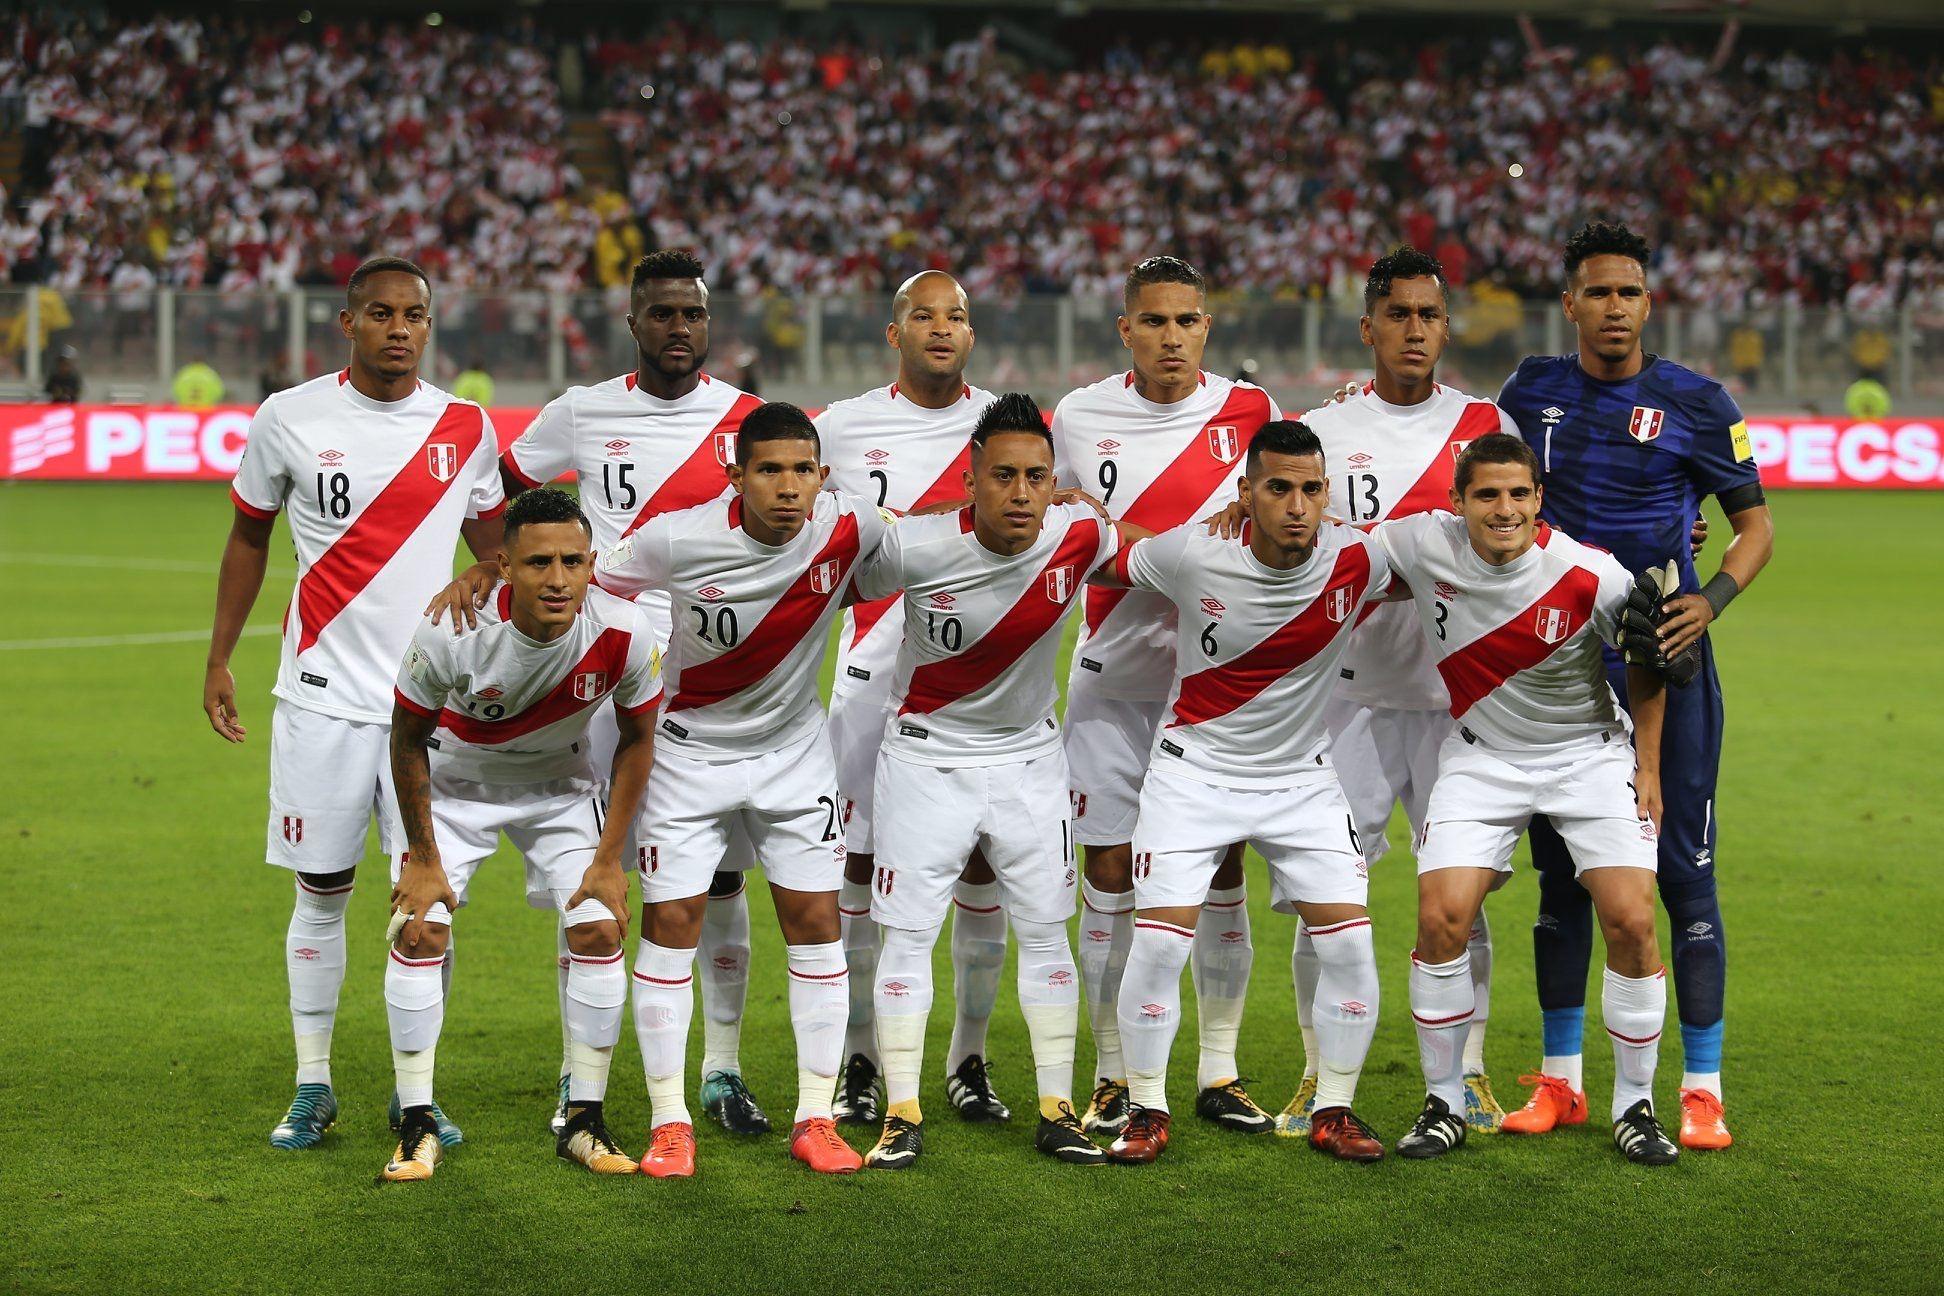 Peru national team jersey 2018 soccer world cup camiseta large